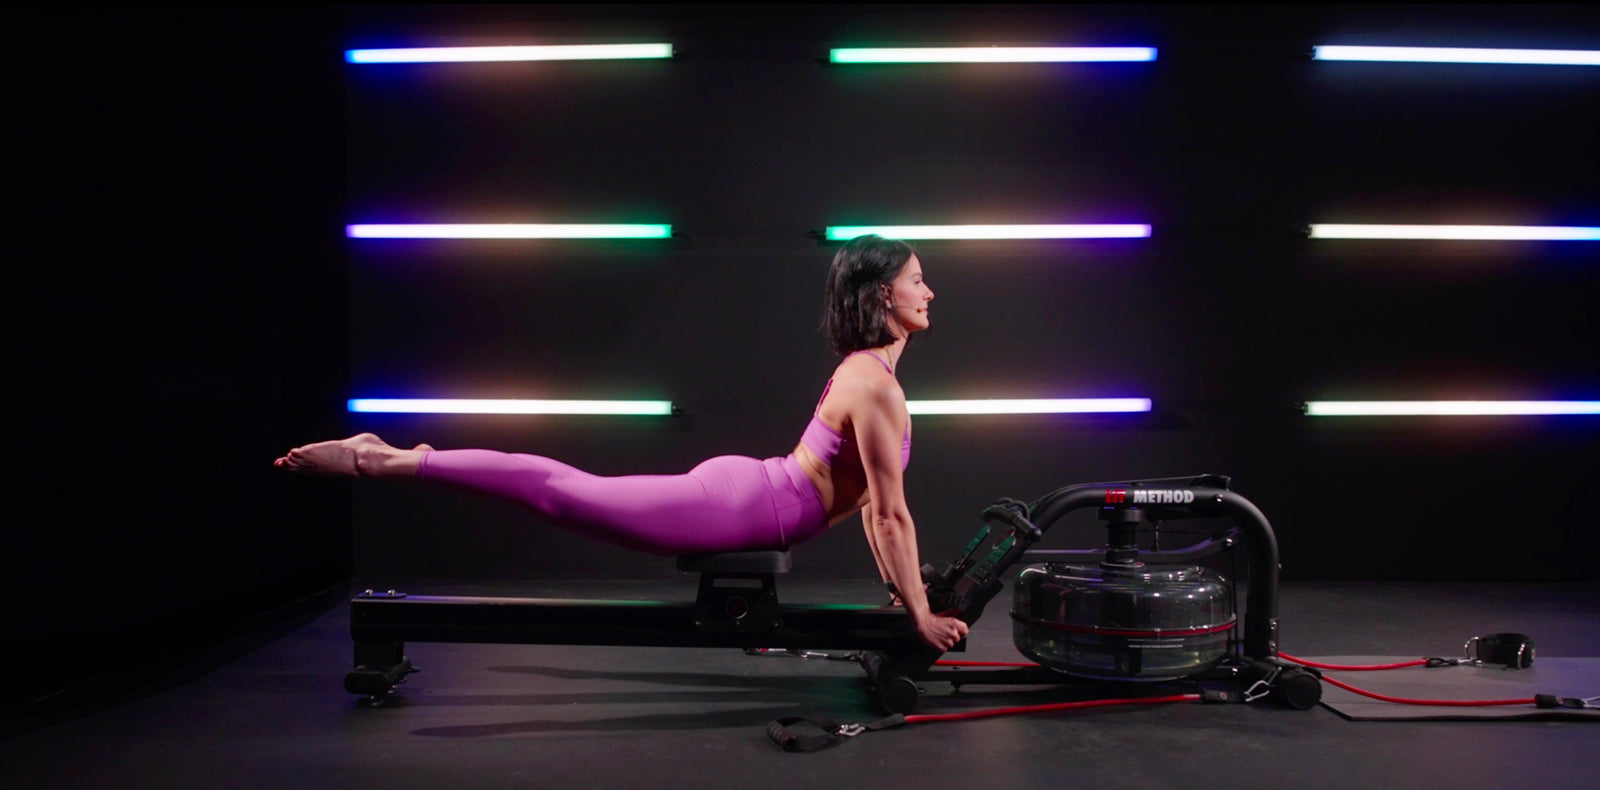 female in purple doing pilates on the lit machine